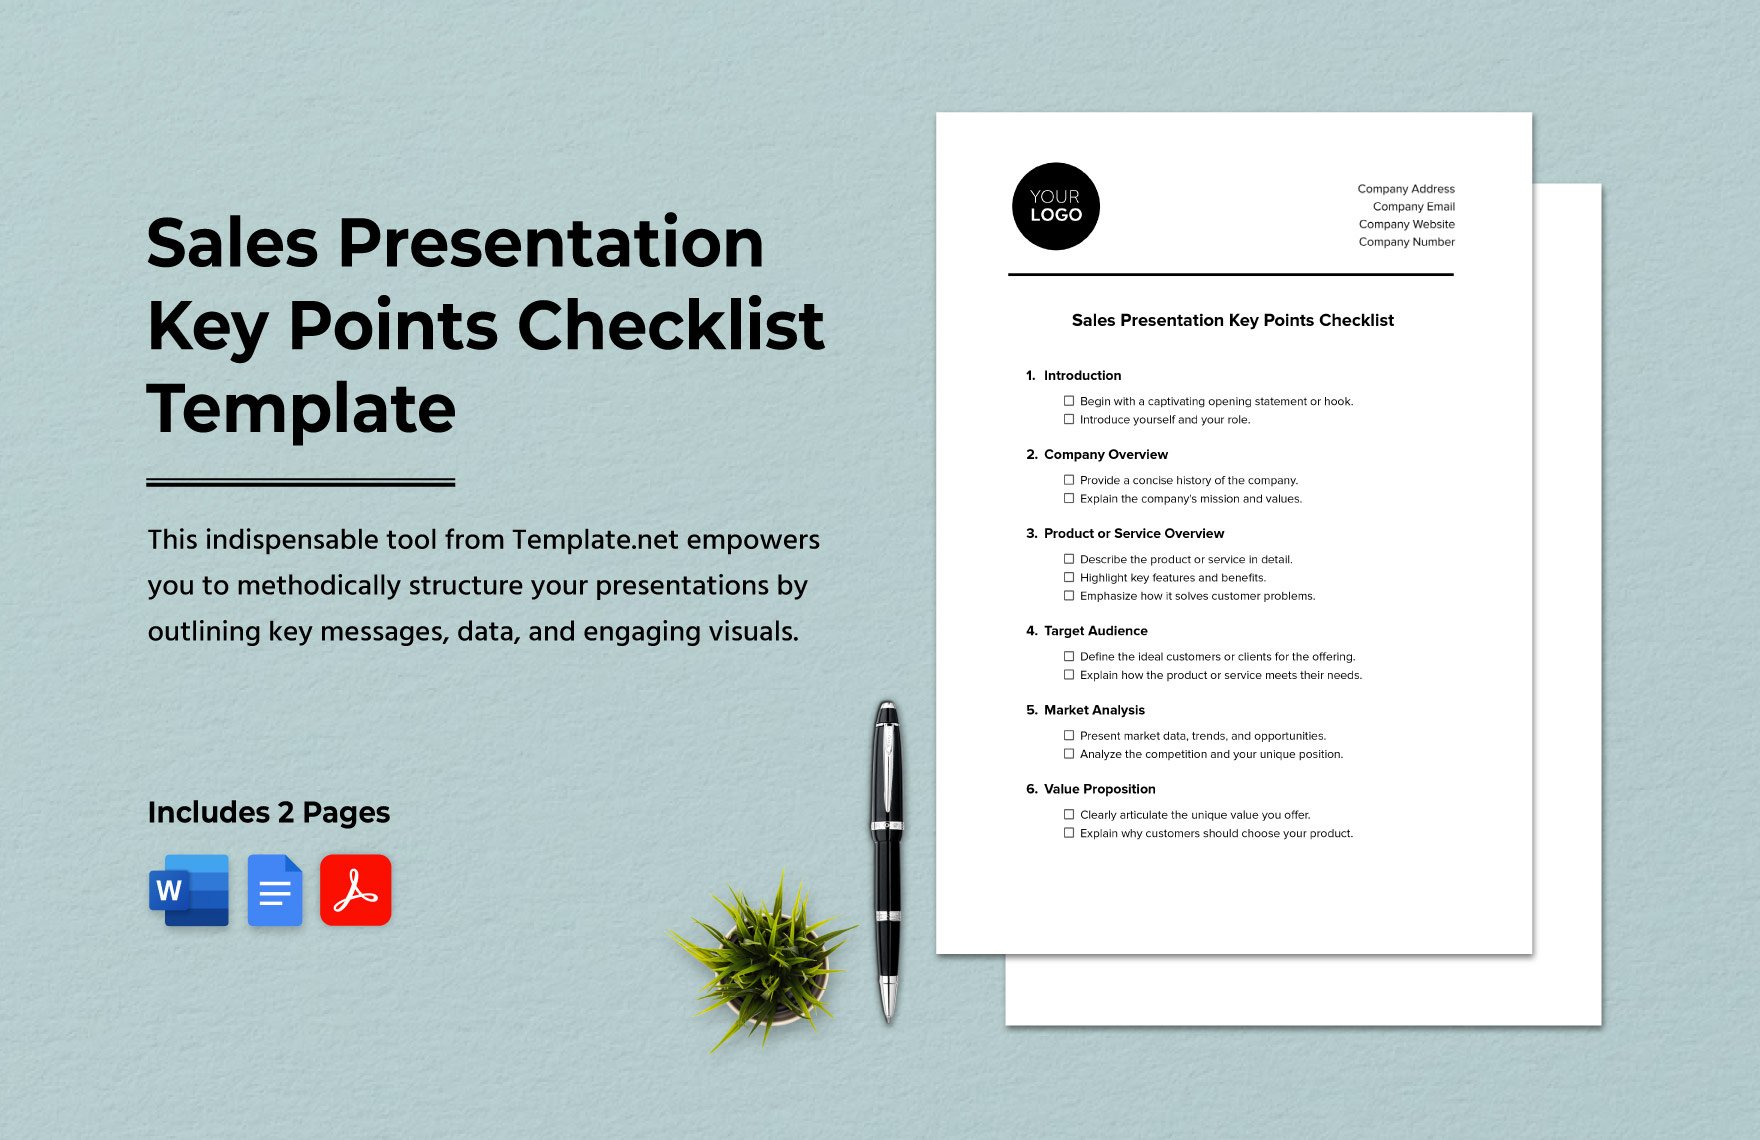 Sales Presentation Key Points Checklist Template in Word, Google Docs, PDF